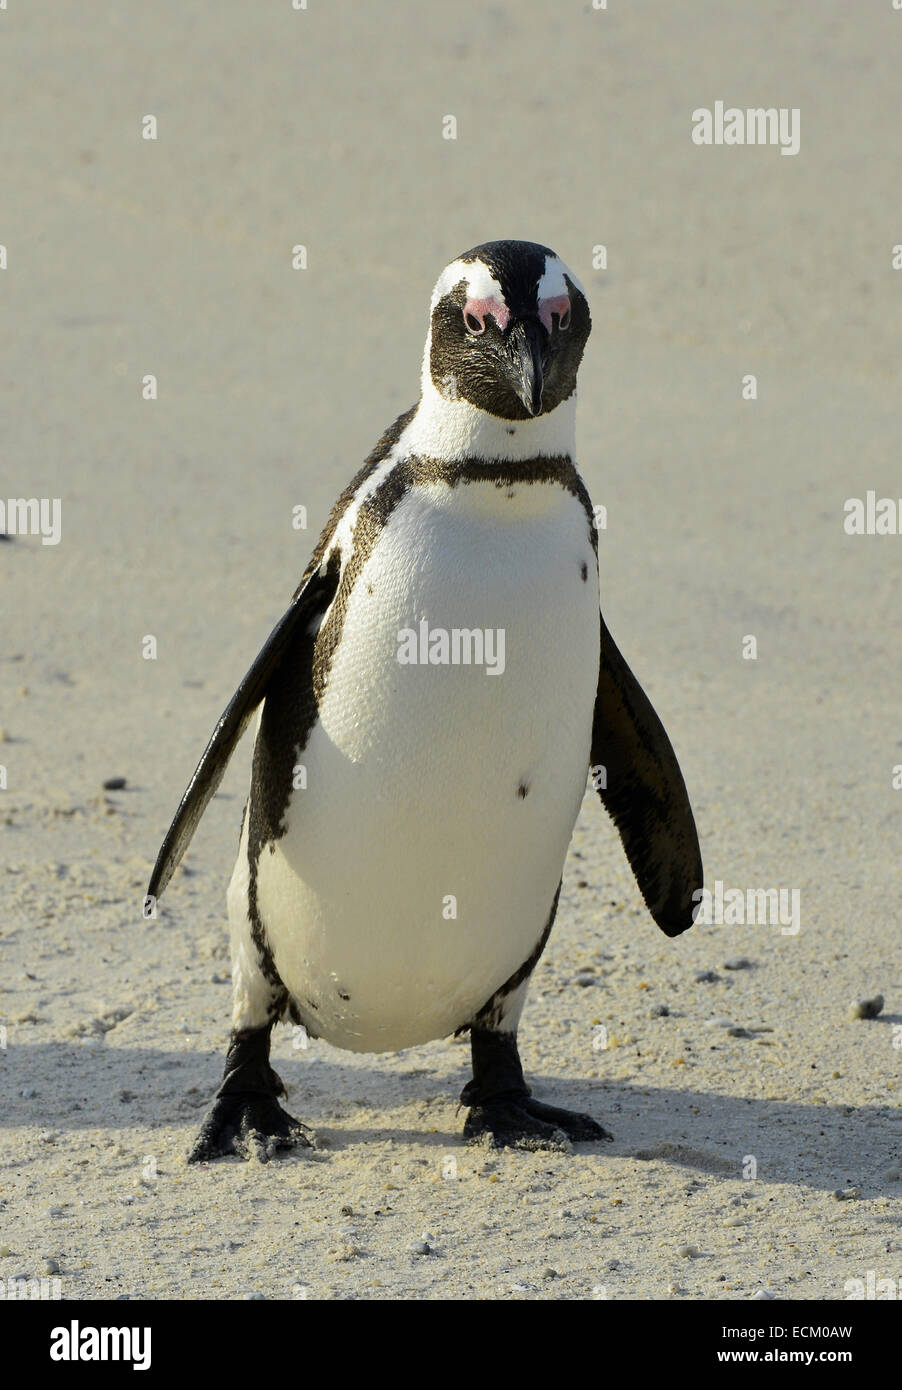 A piedi pinguino africano (Spheniscus demersus) sulla spiaggia. Foto Stock